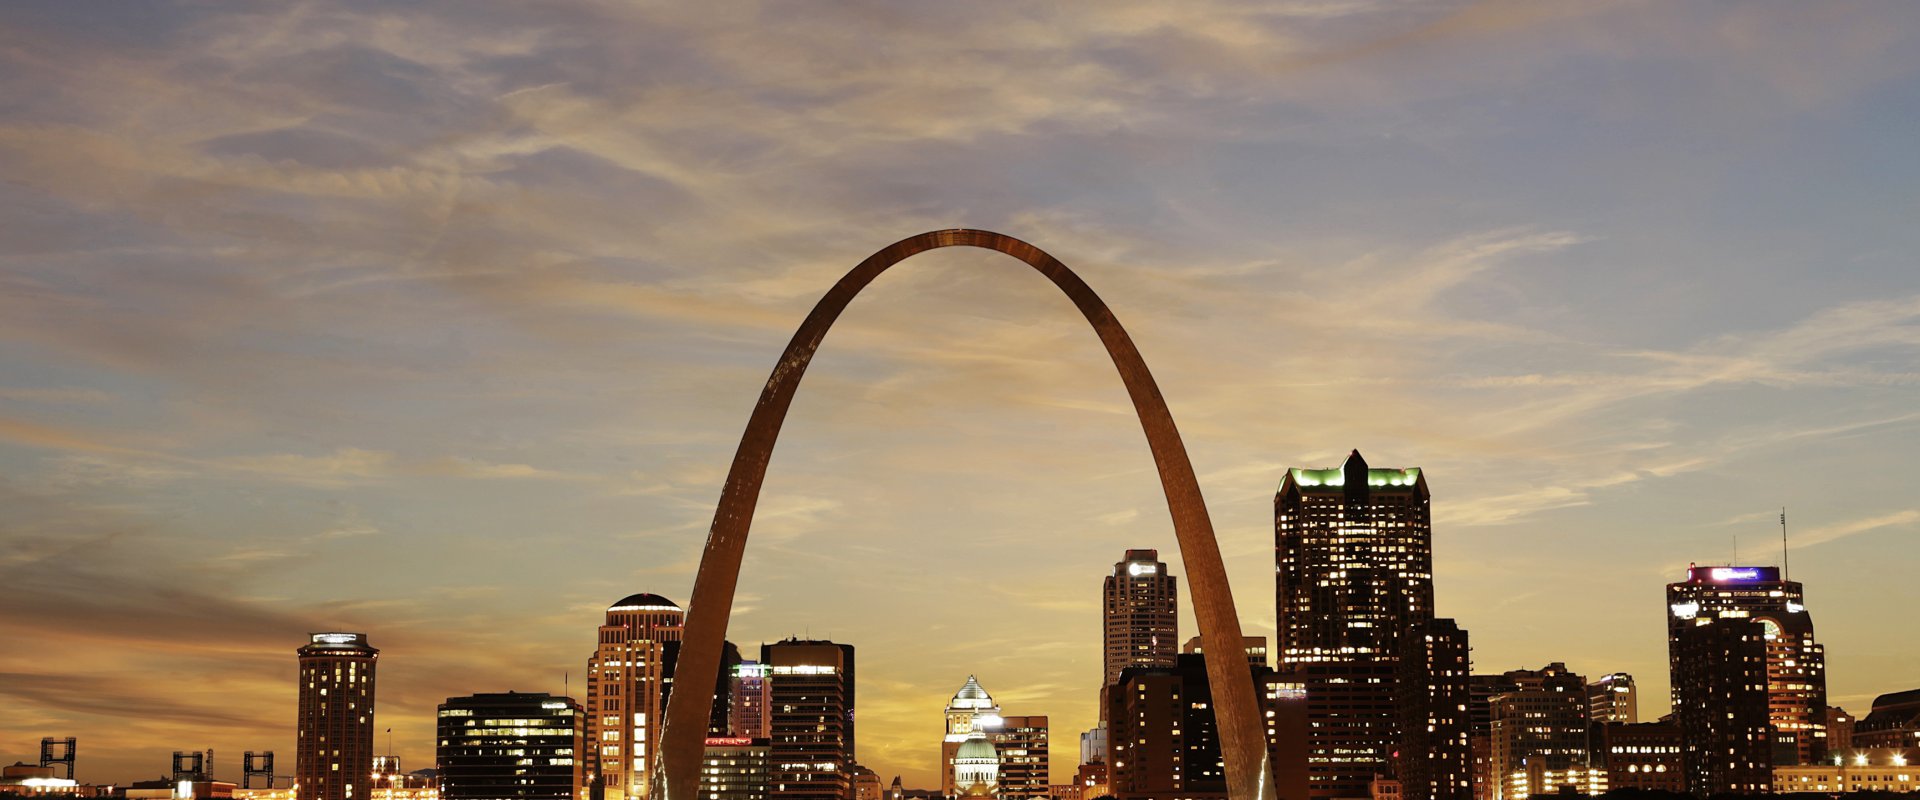 St. Louis, Missouri arch and skyline at dusk